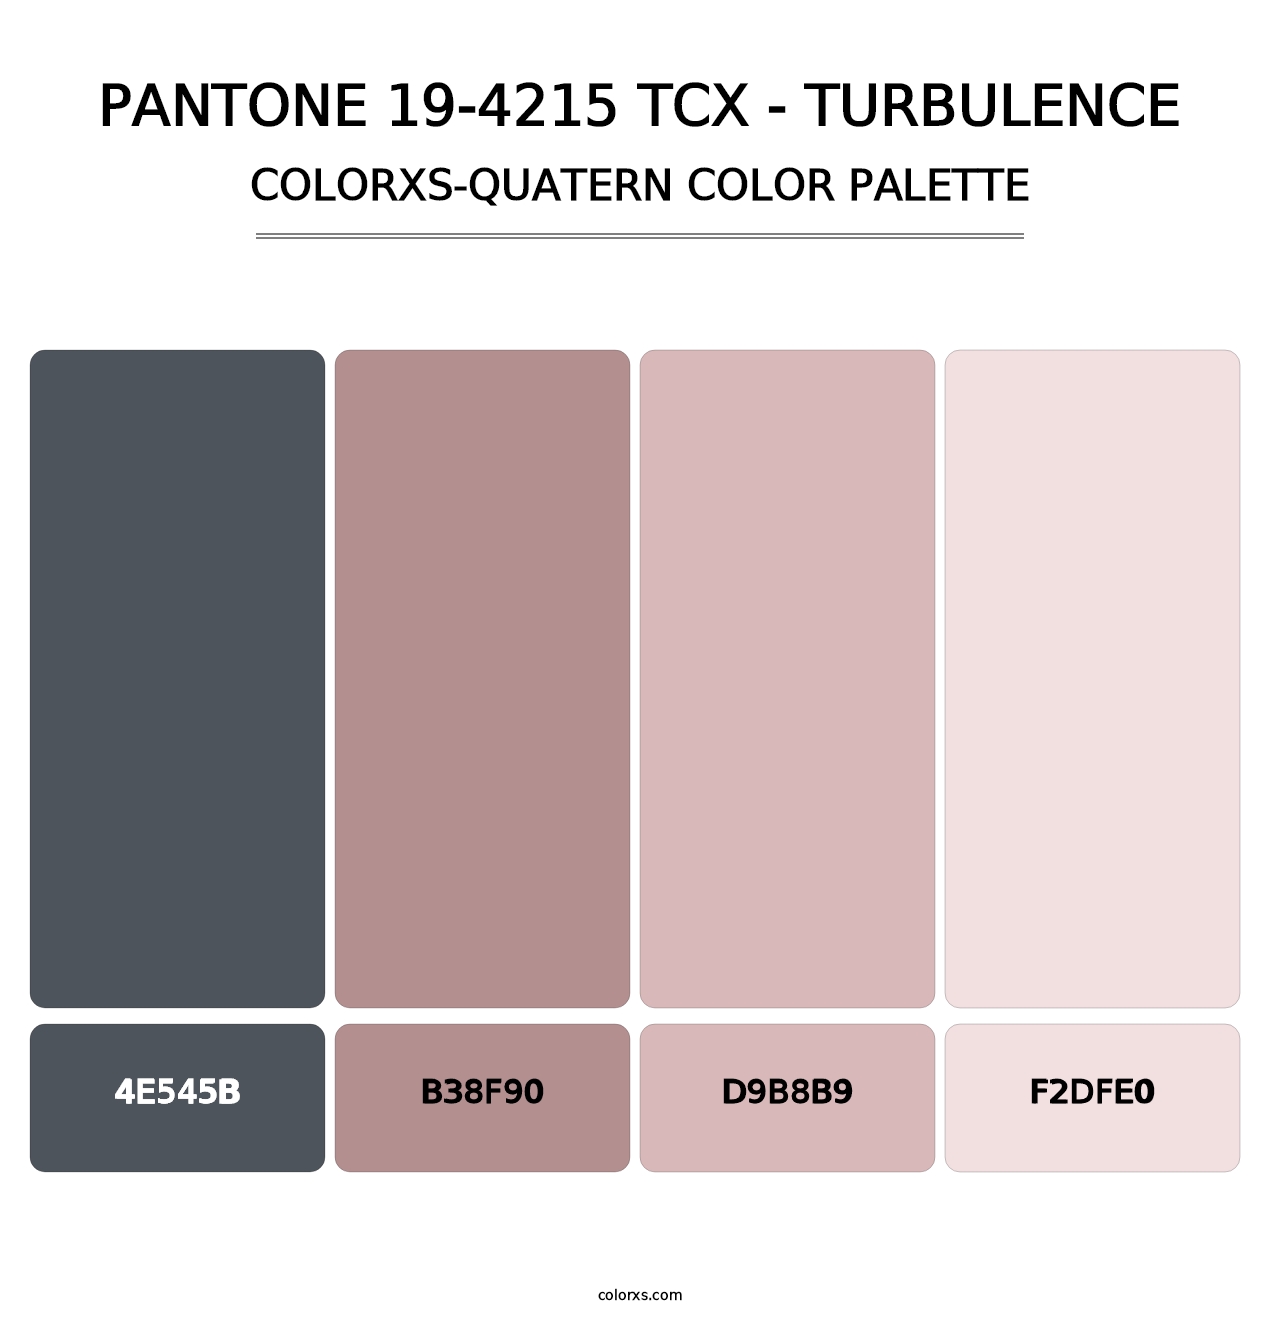 PANTONE 19-4215 TCX - Turbulence - Colorxs Quatern Palette